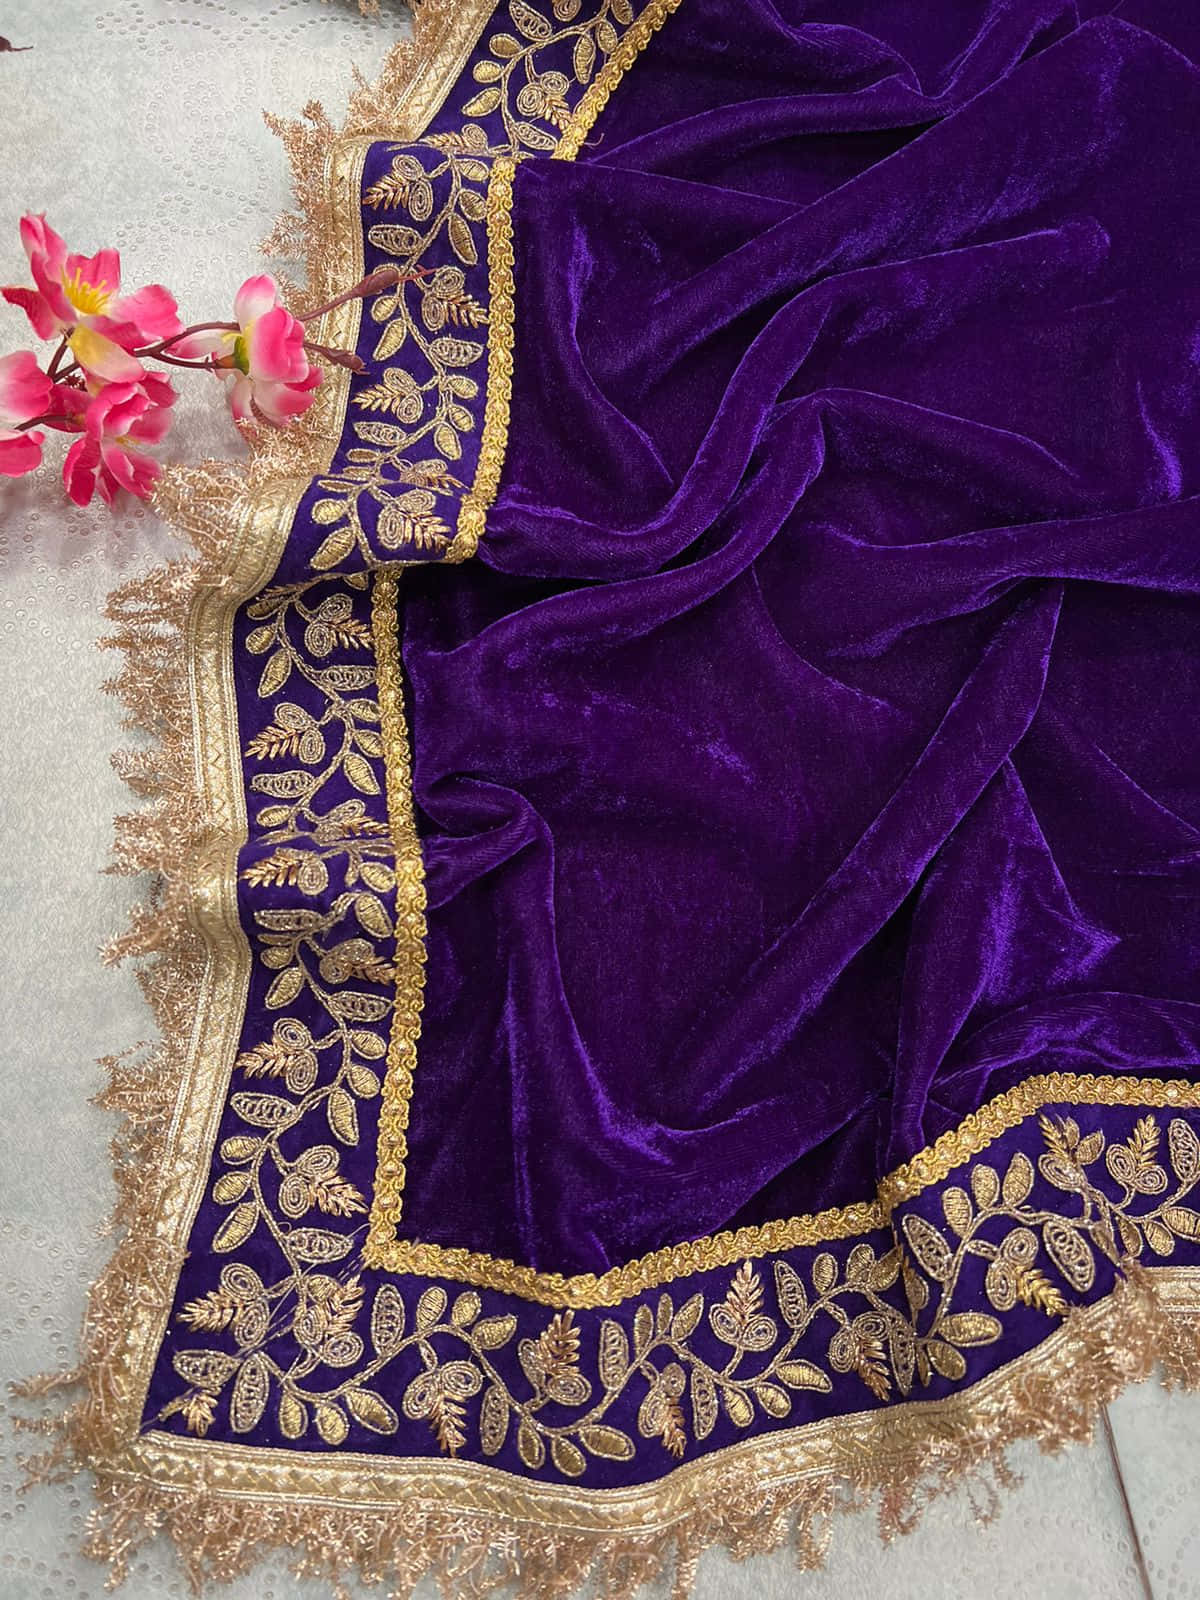 Luxurious Wallpaper with a Swirl of Purple Velvet Wallpaper